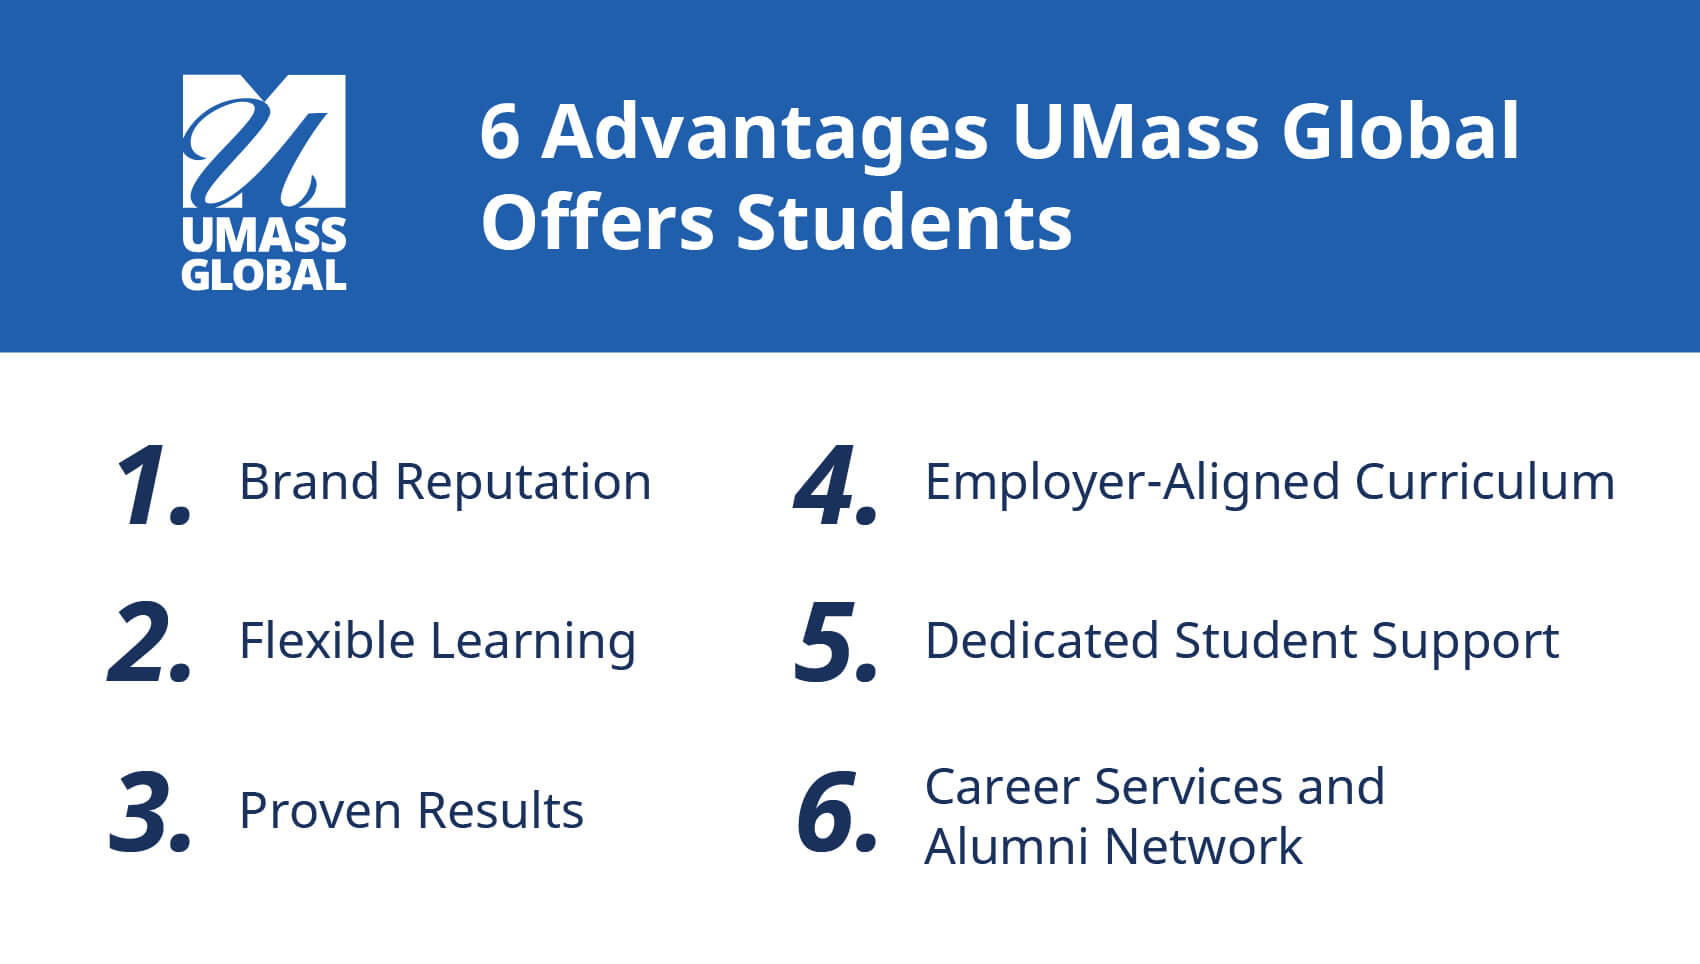 6 Advantages of UMass Global